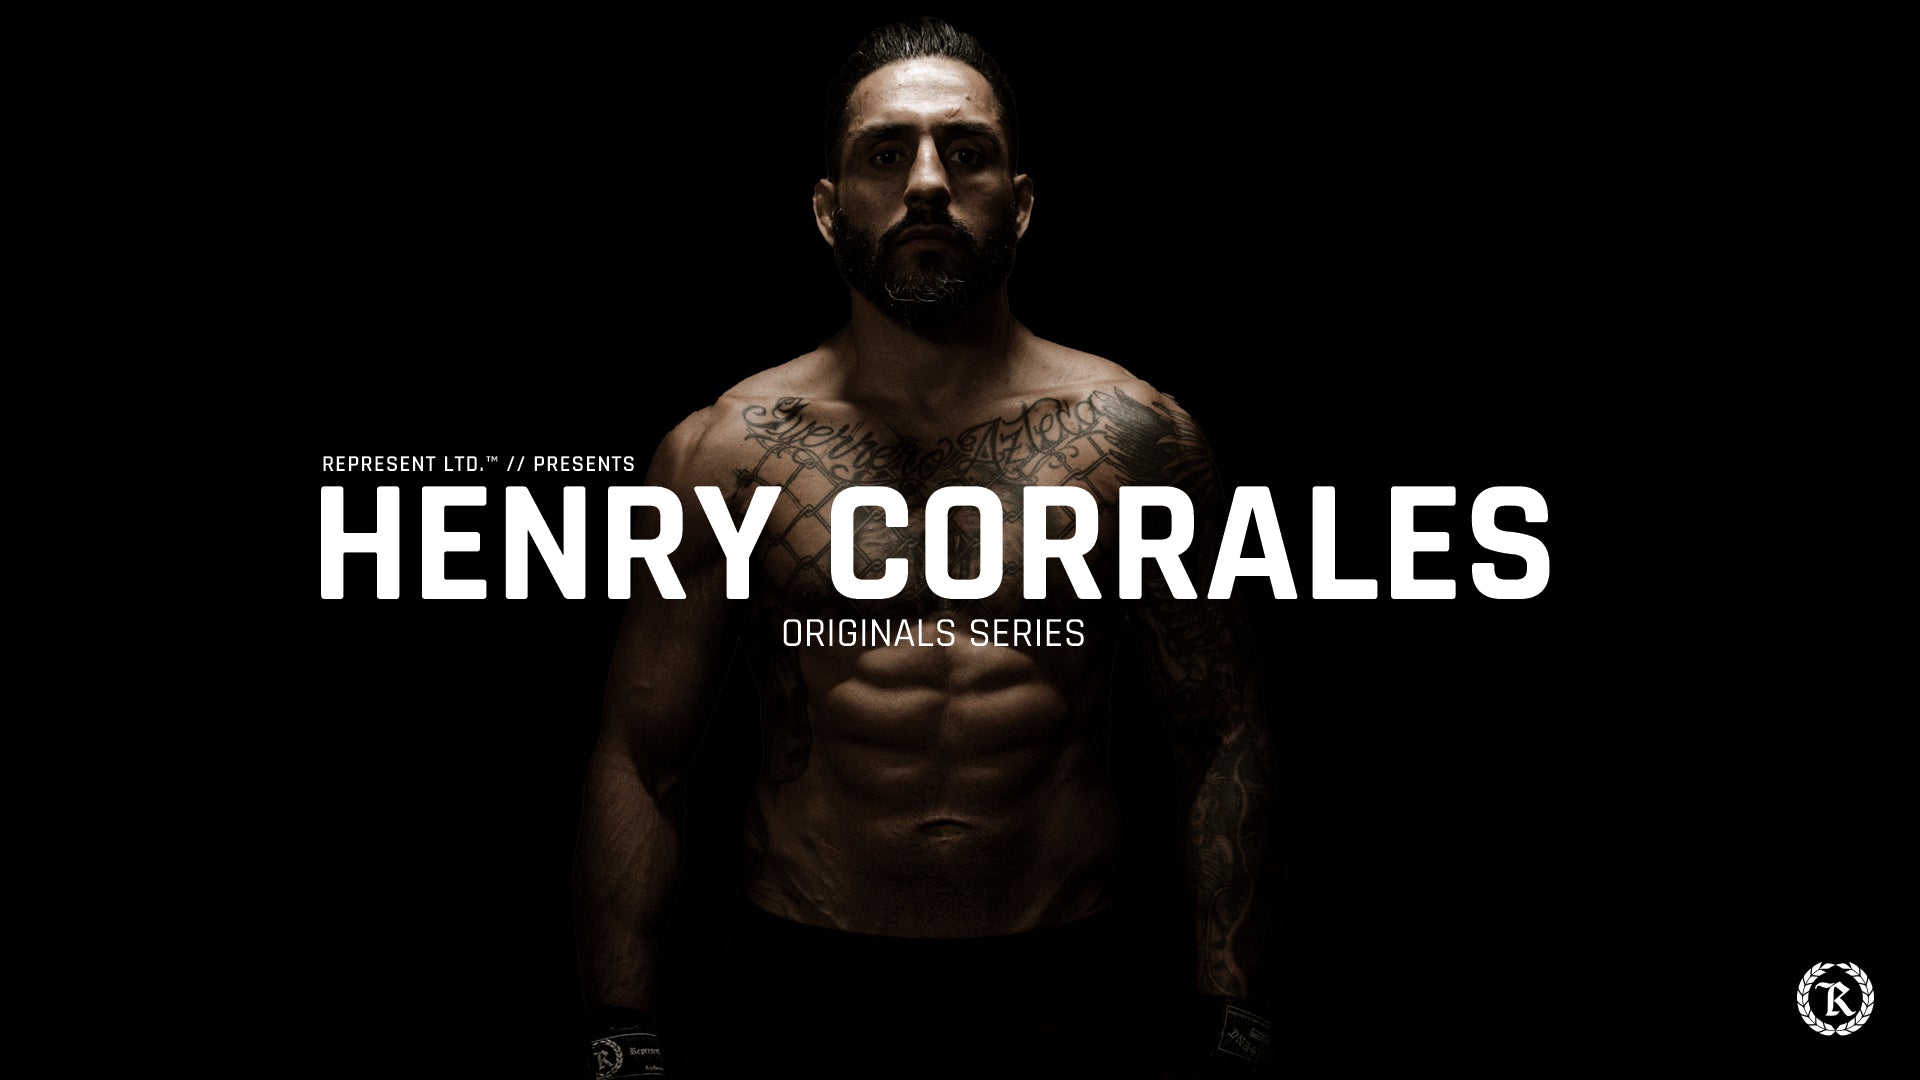 ORIGINALS SERIES: Henry Corrales